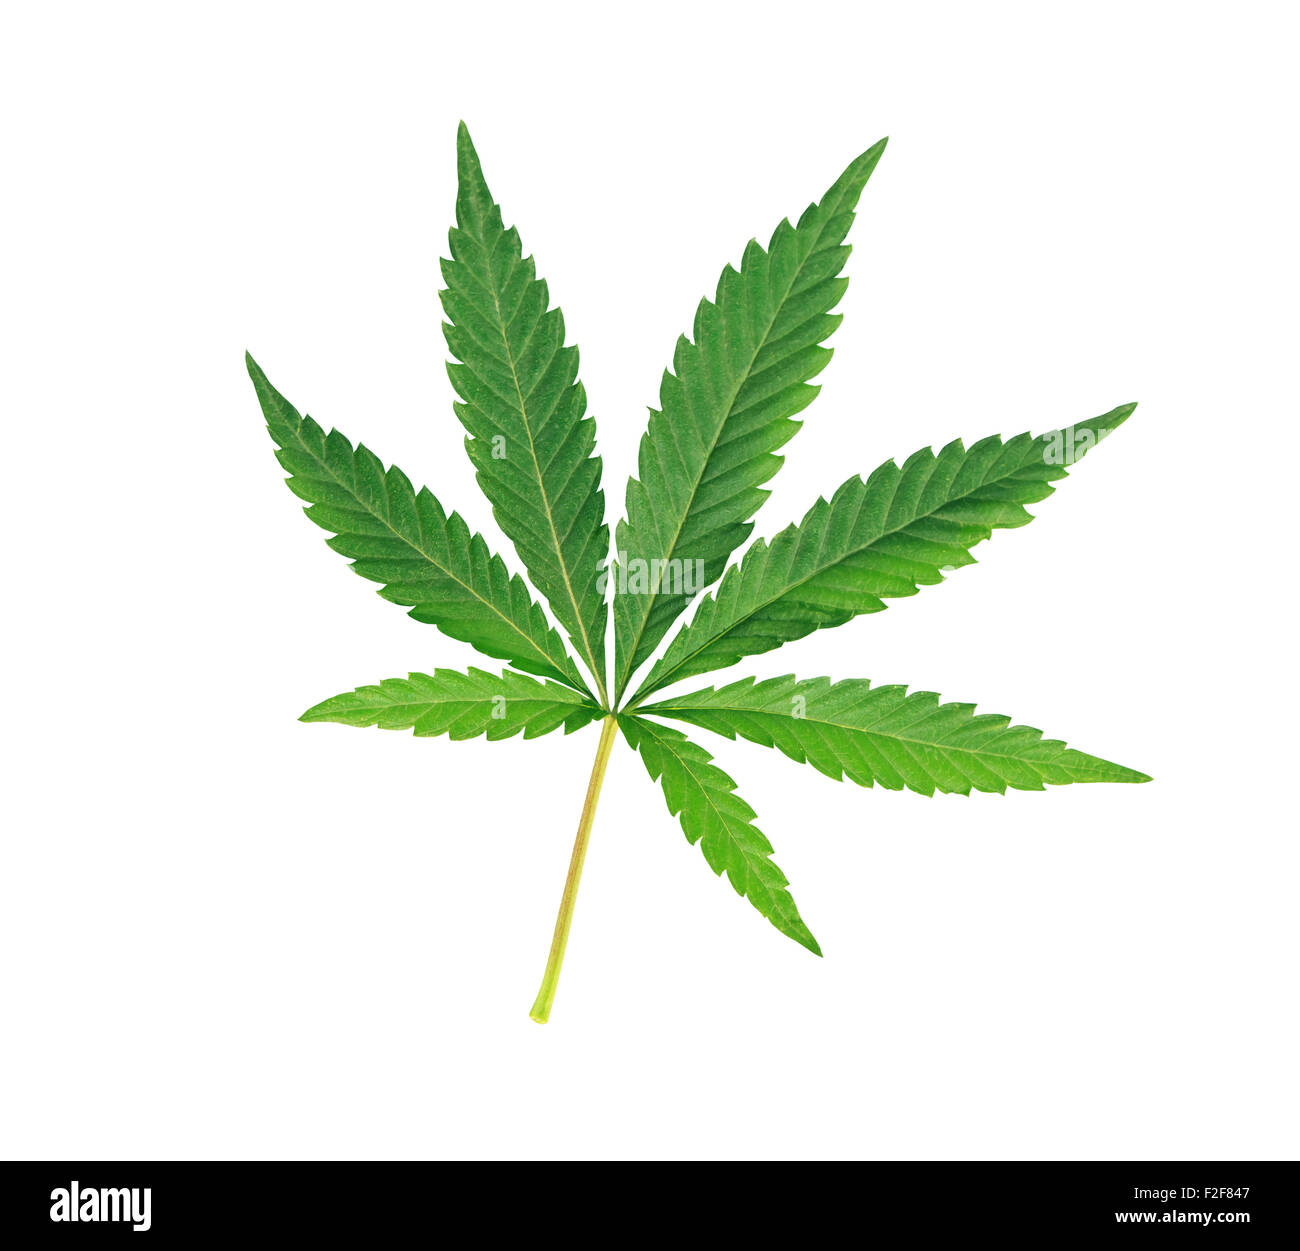 Cannabis leaf, marijuana isolated over white Stock Photo